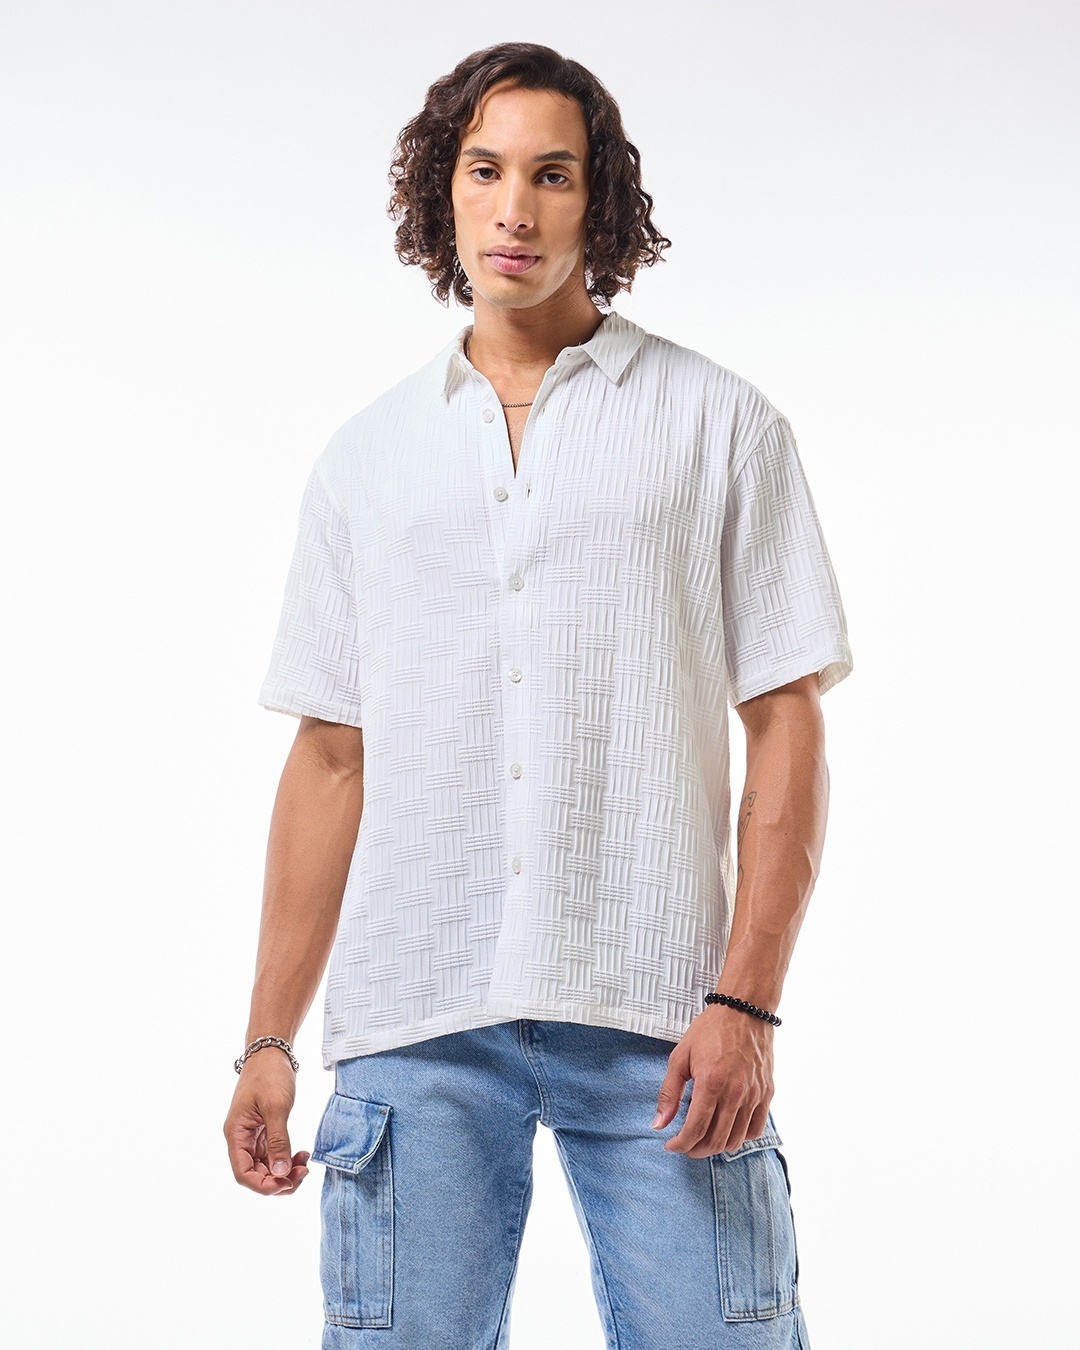 White Shirt for Men - casual outfits for men | Bewakoof Blog